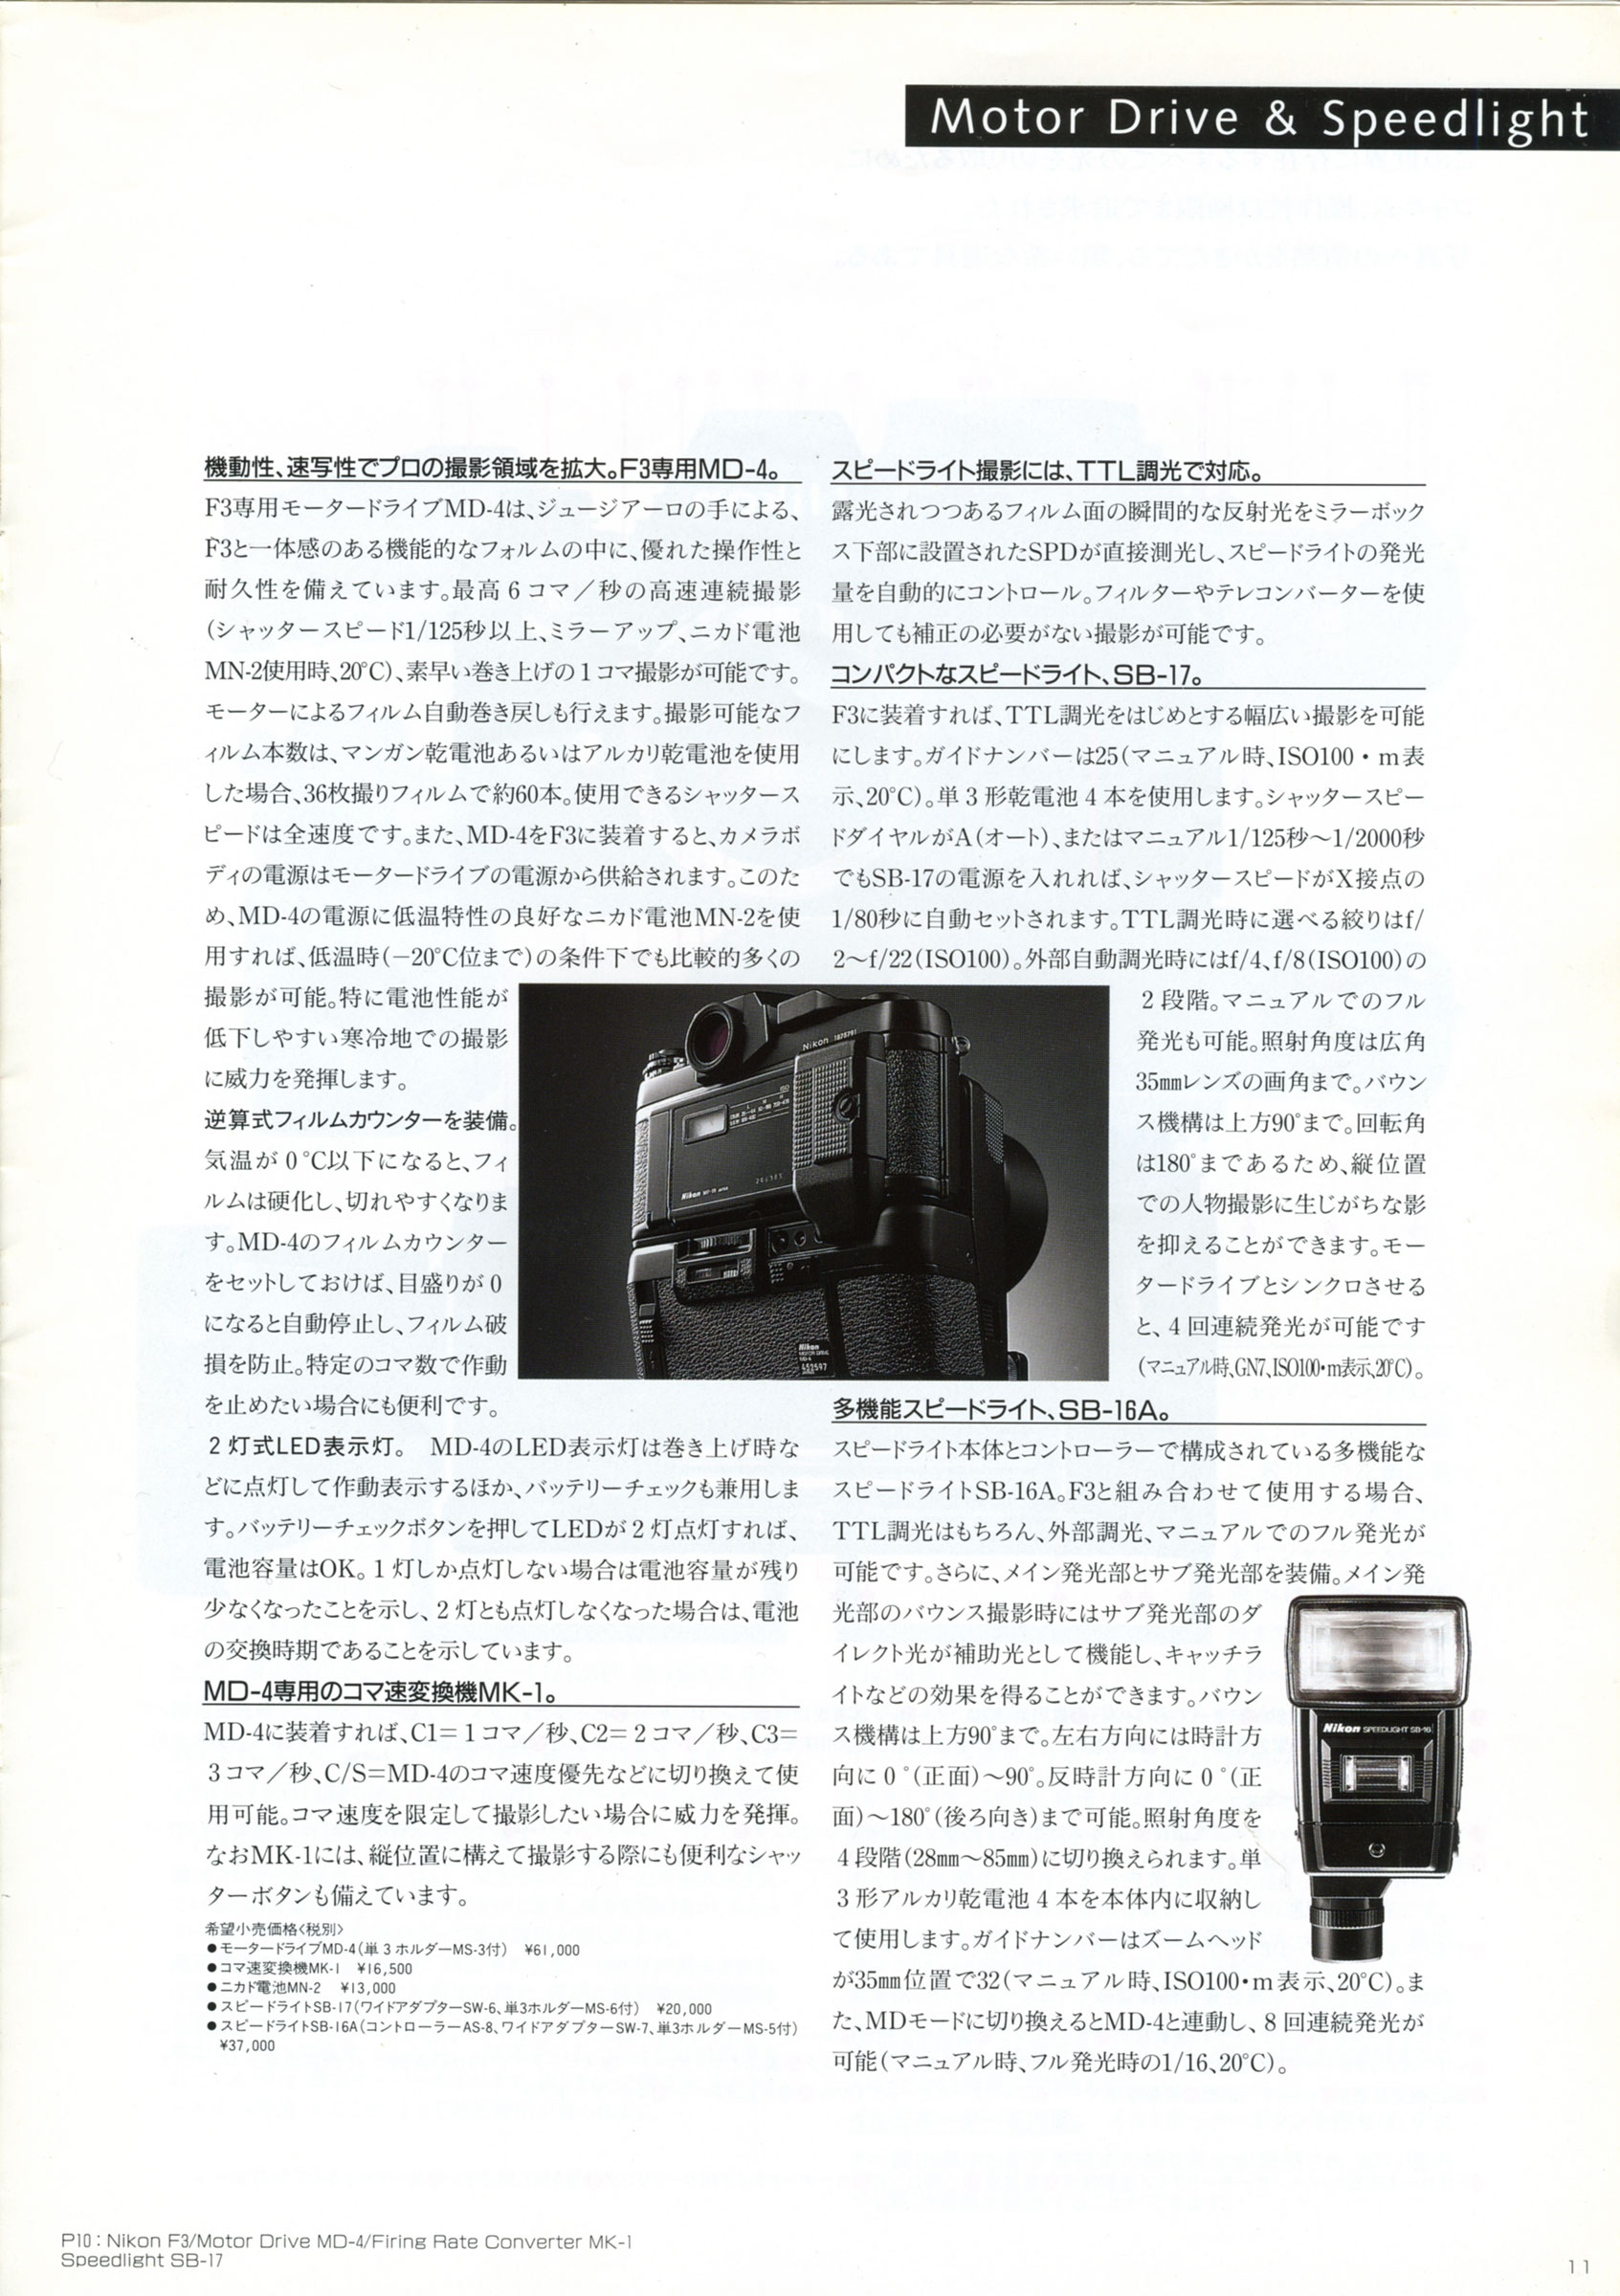 Nikon F3 1998年12月12日のカタログ11ページ